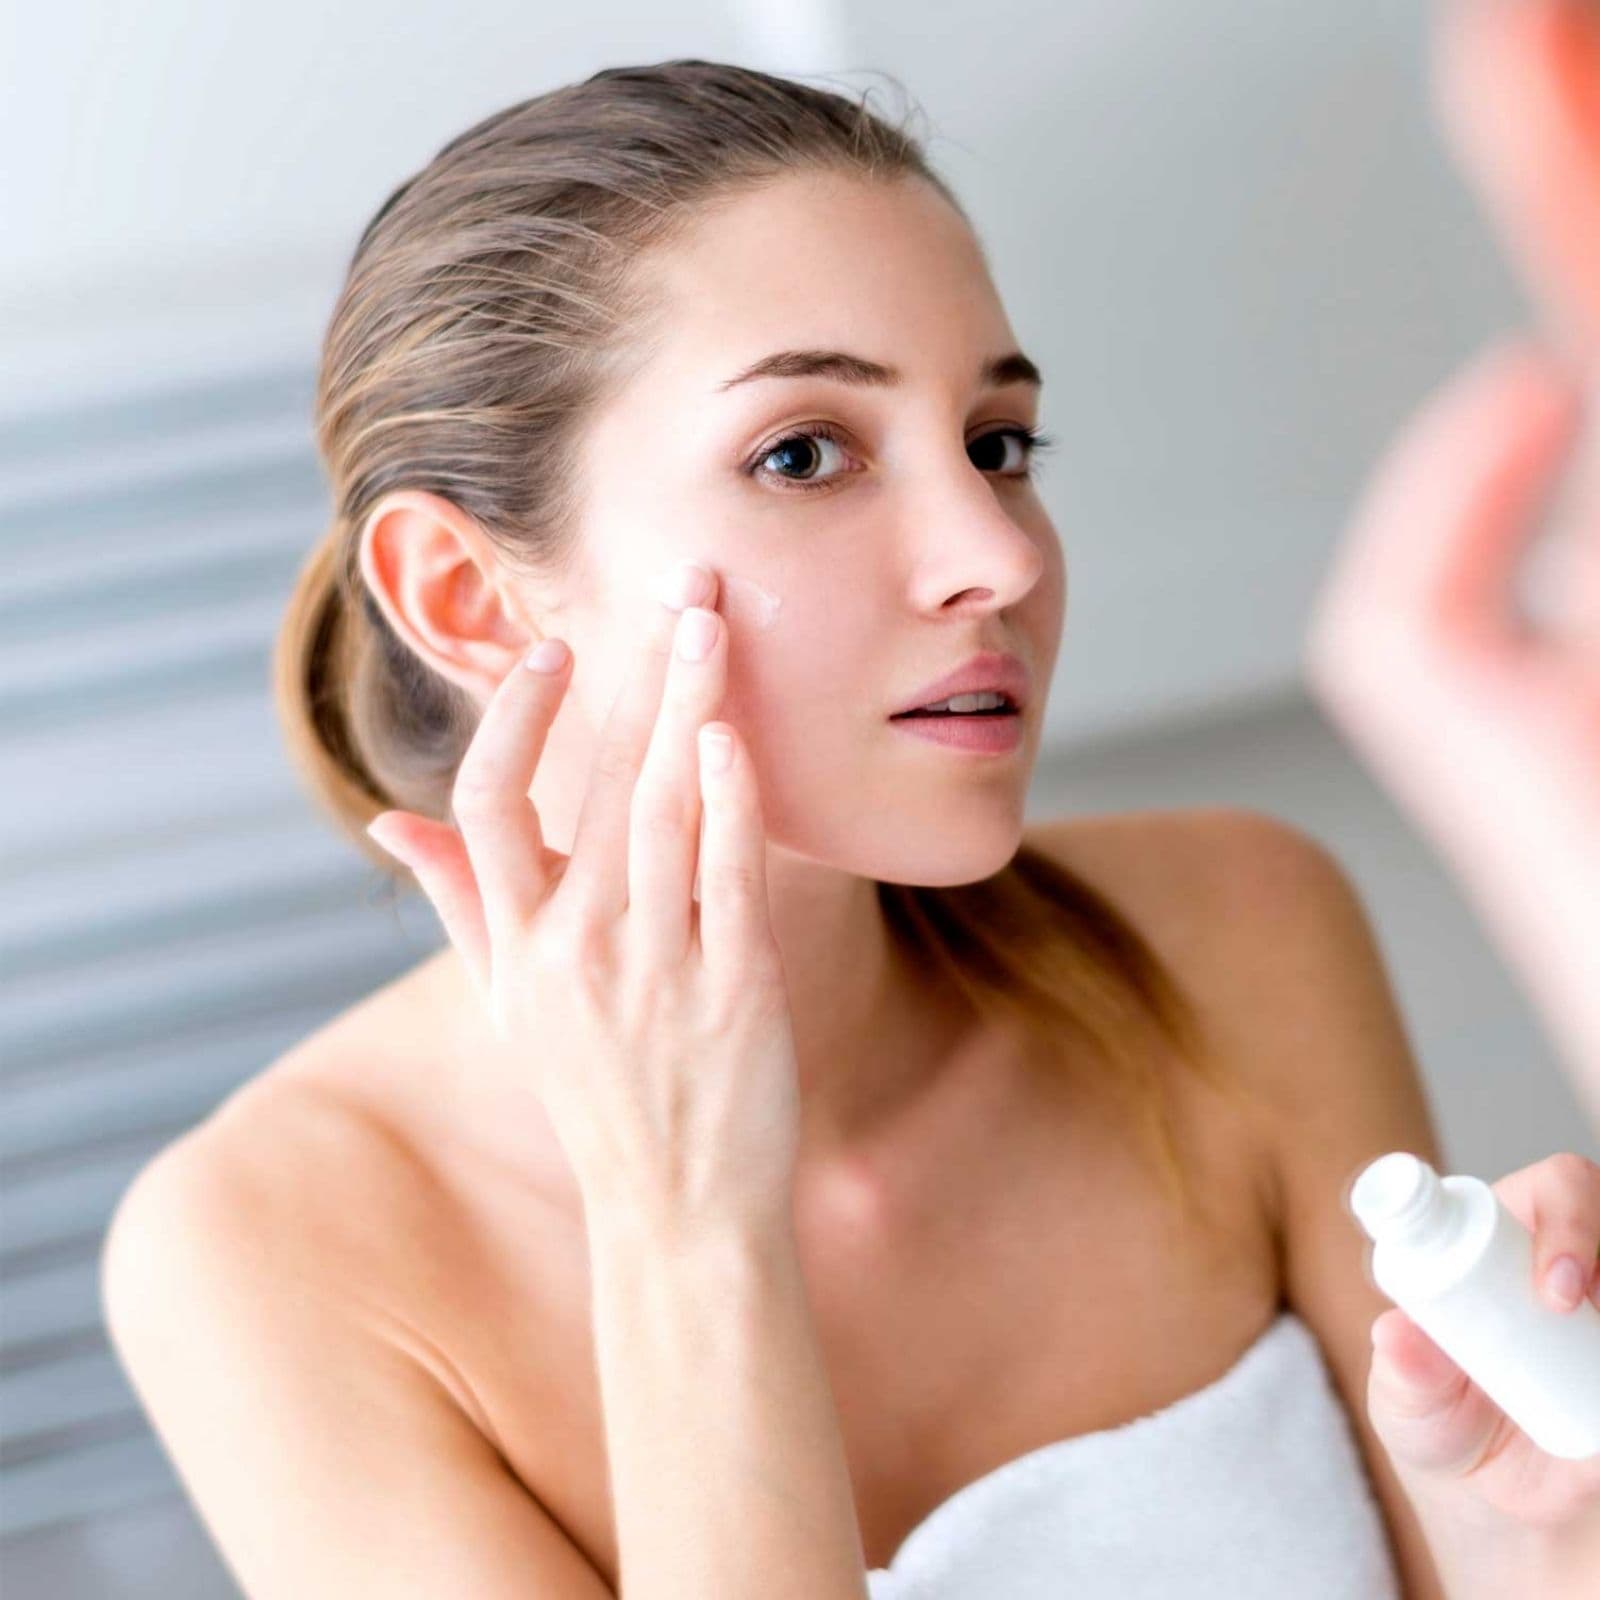 This is how sandalwood helps to get rid of pimples | Skin Care Tips:  ಶ್ರೀಗಂಧವನ್ನು ಹೀಗೆ ಬಳಸಿದ್ರೆ ಮೊಡವೆಗಳು ಮಾಯವಾಗುತ್ತೆ– News18 Kannada